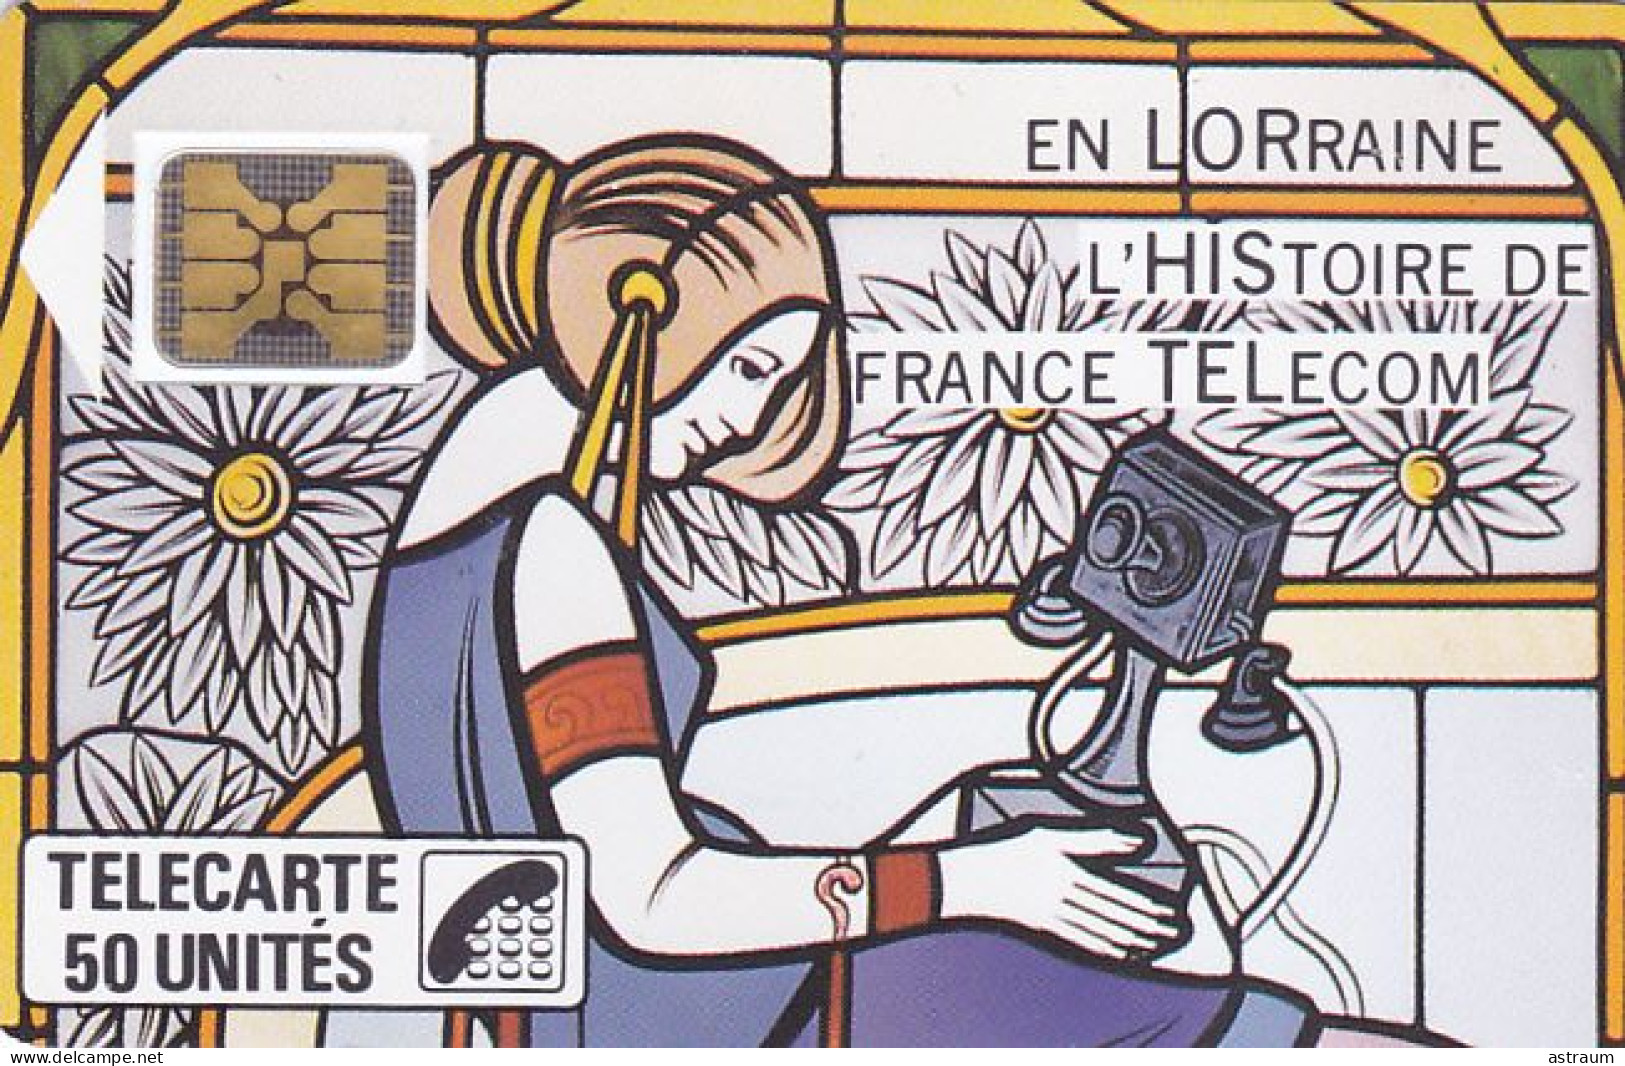 Telecarte Publique F70 LUXE - LO HIS.TEL - Musée NANCY - Sc4on - 12000 Ex - 50 Un - 1989 - 1989